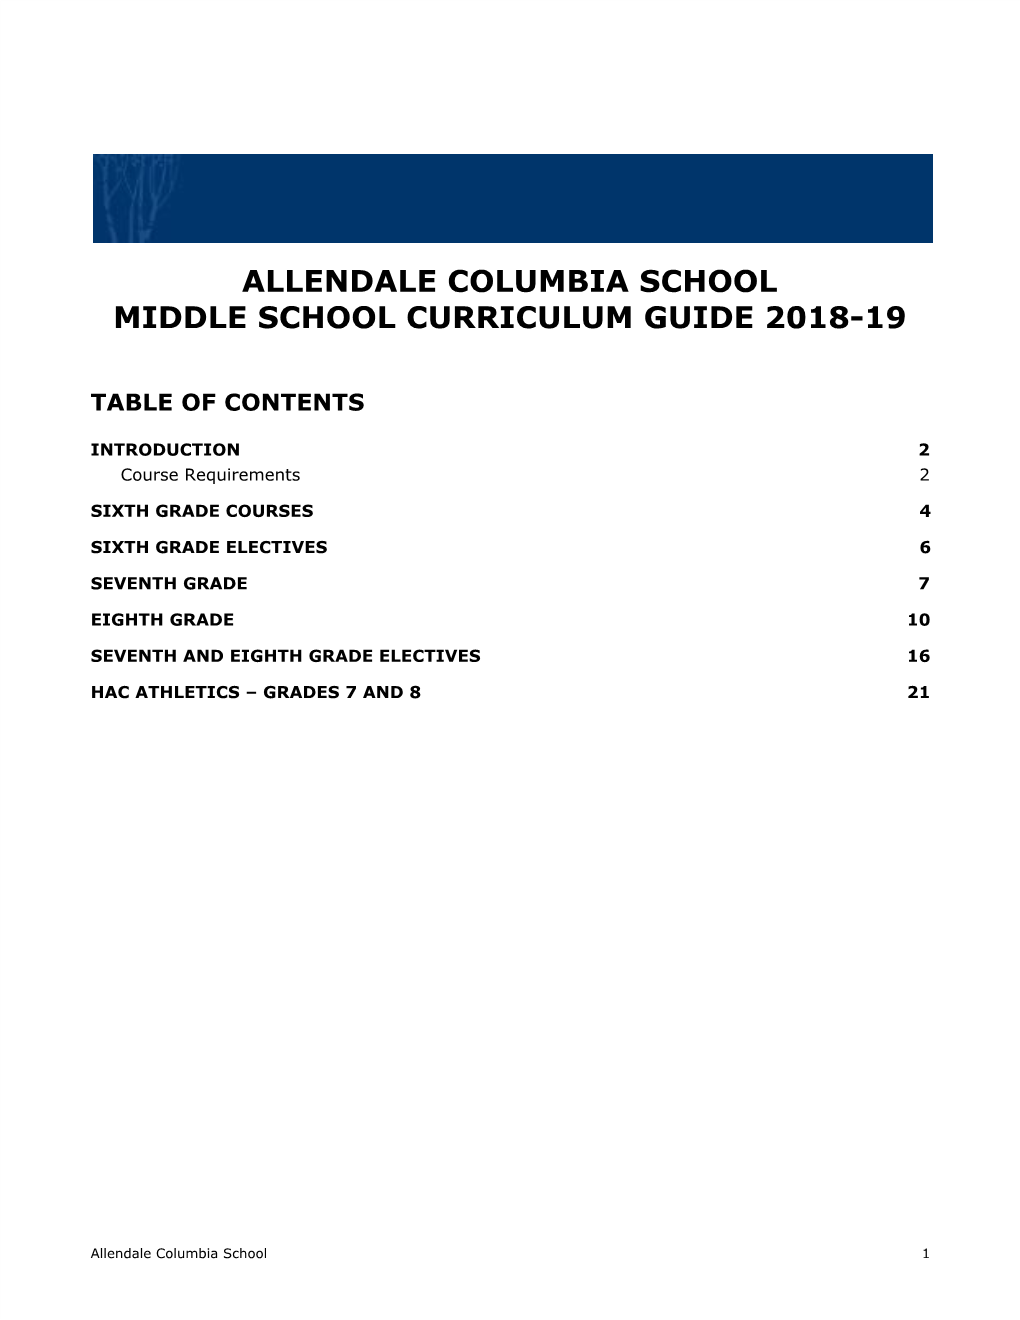 Allendale Columbia School Middle School Curriculum Guide 2018-19